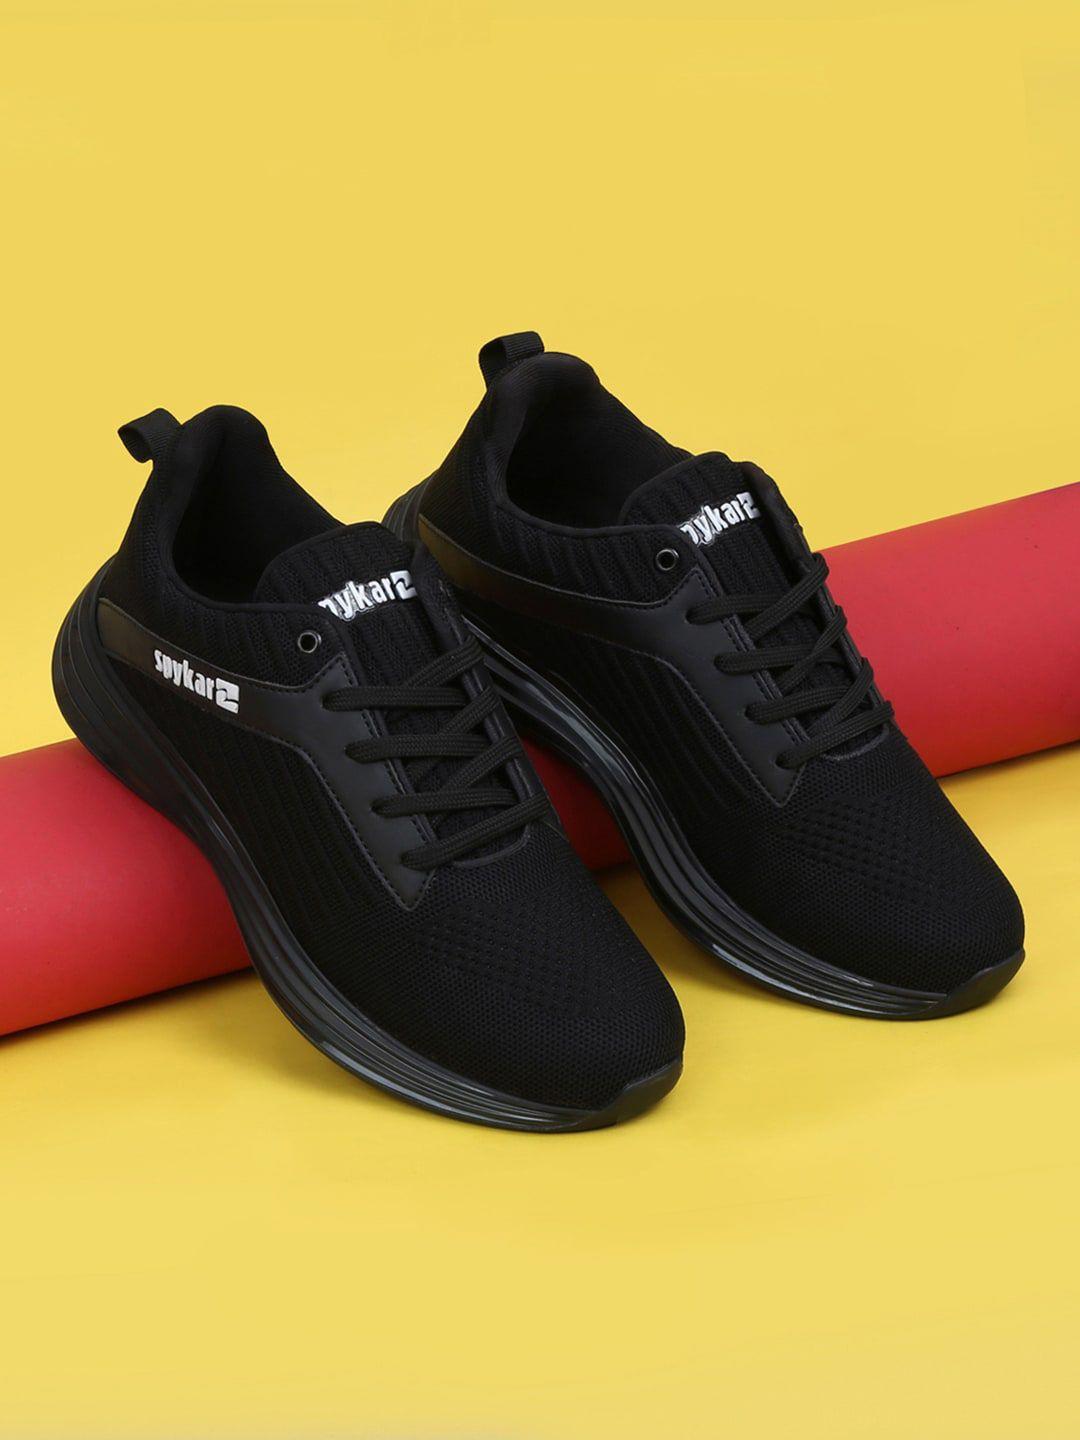 spykar-men-carol-black-sporty-textile-walking-non-marking-shoes